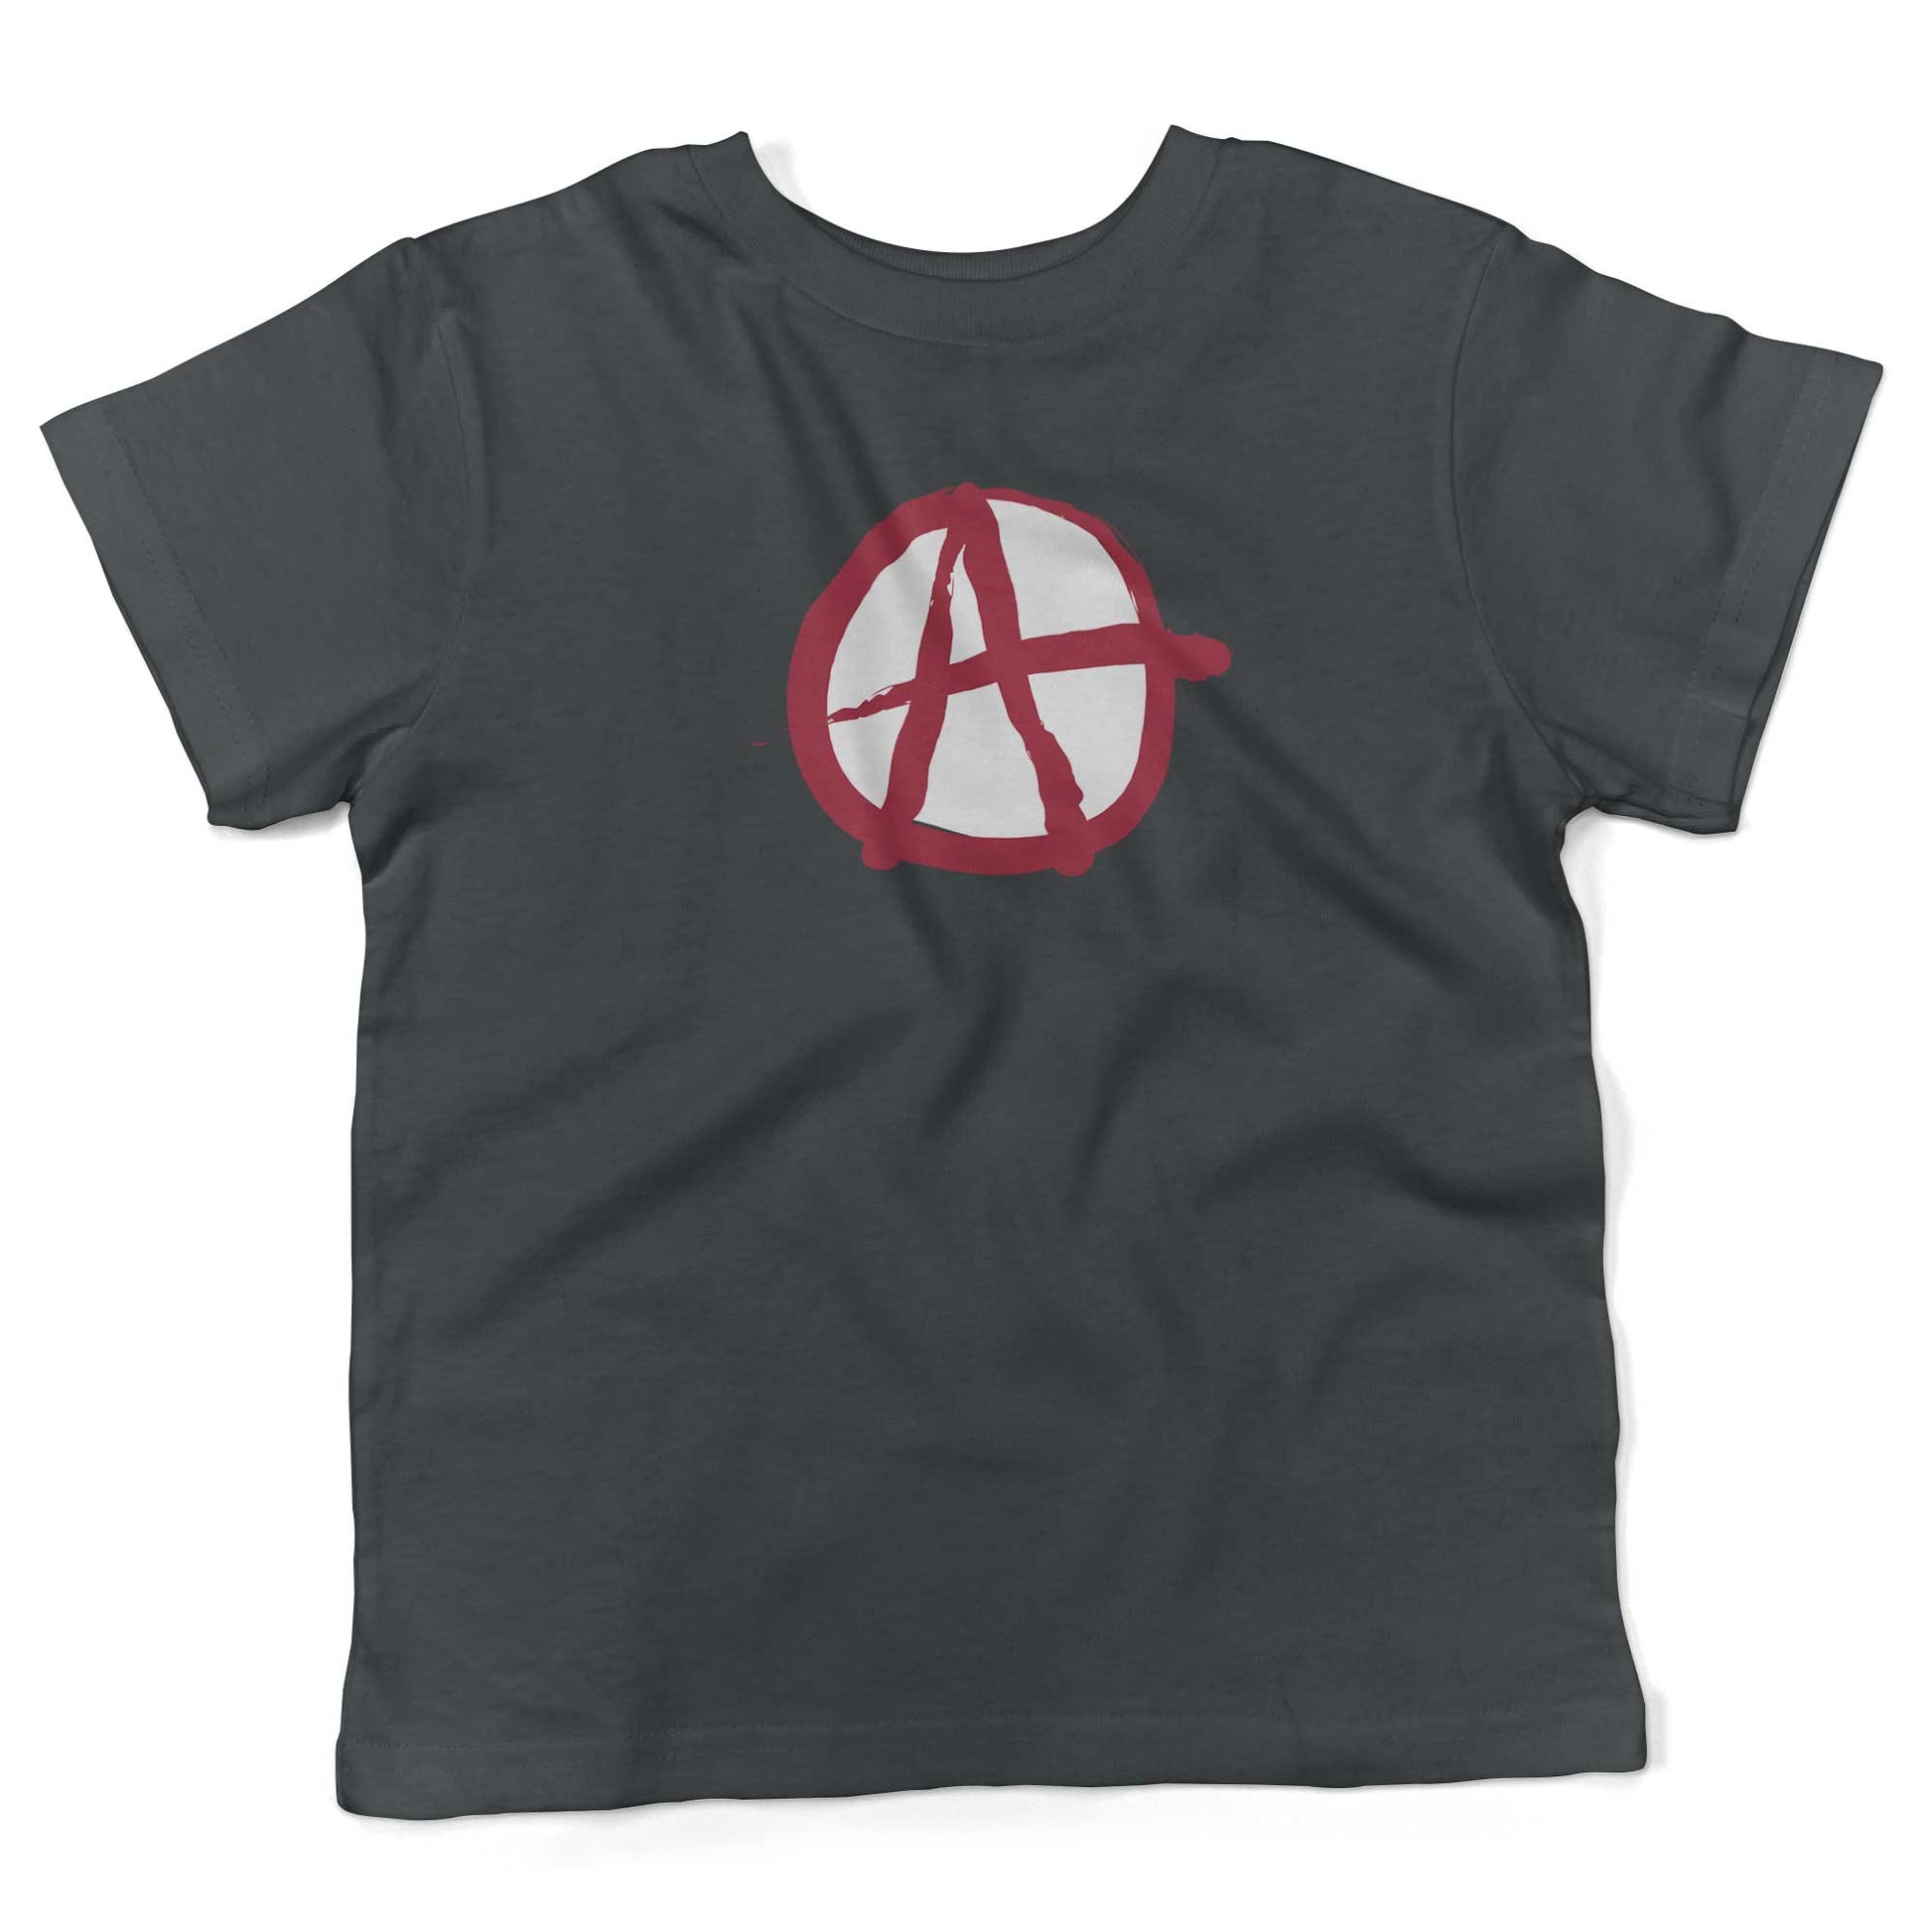 Anarchy Symbol Toddler Shirt-Asphalt-2T